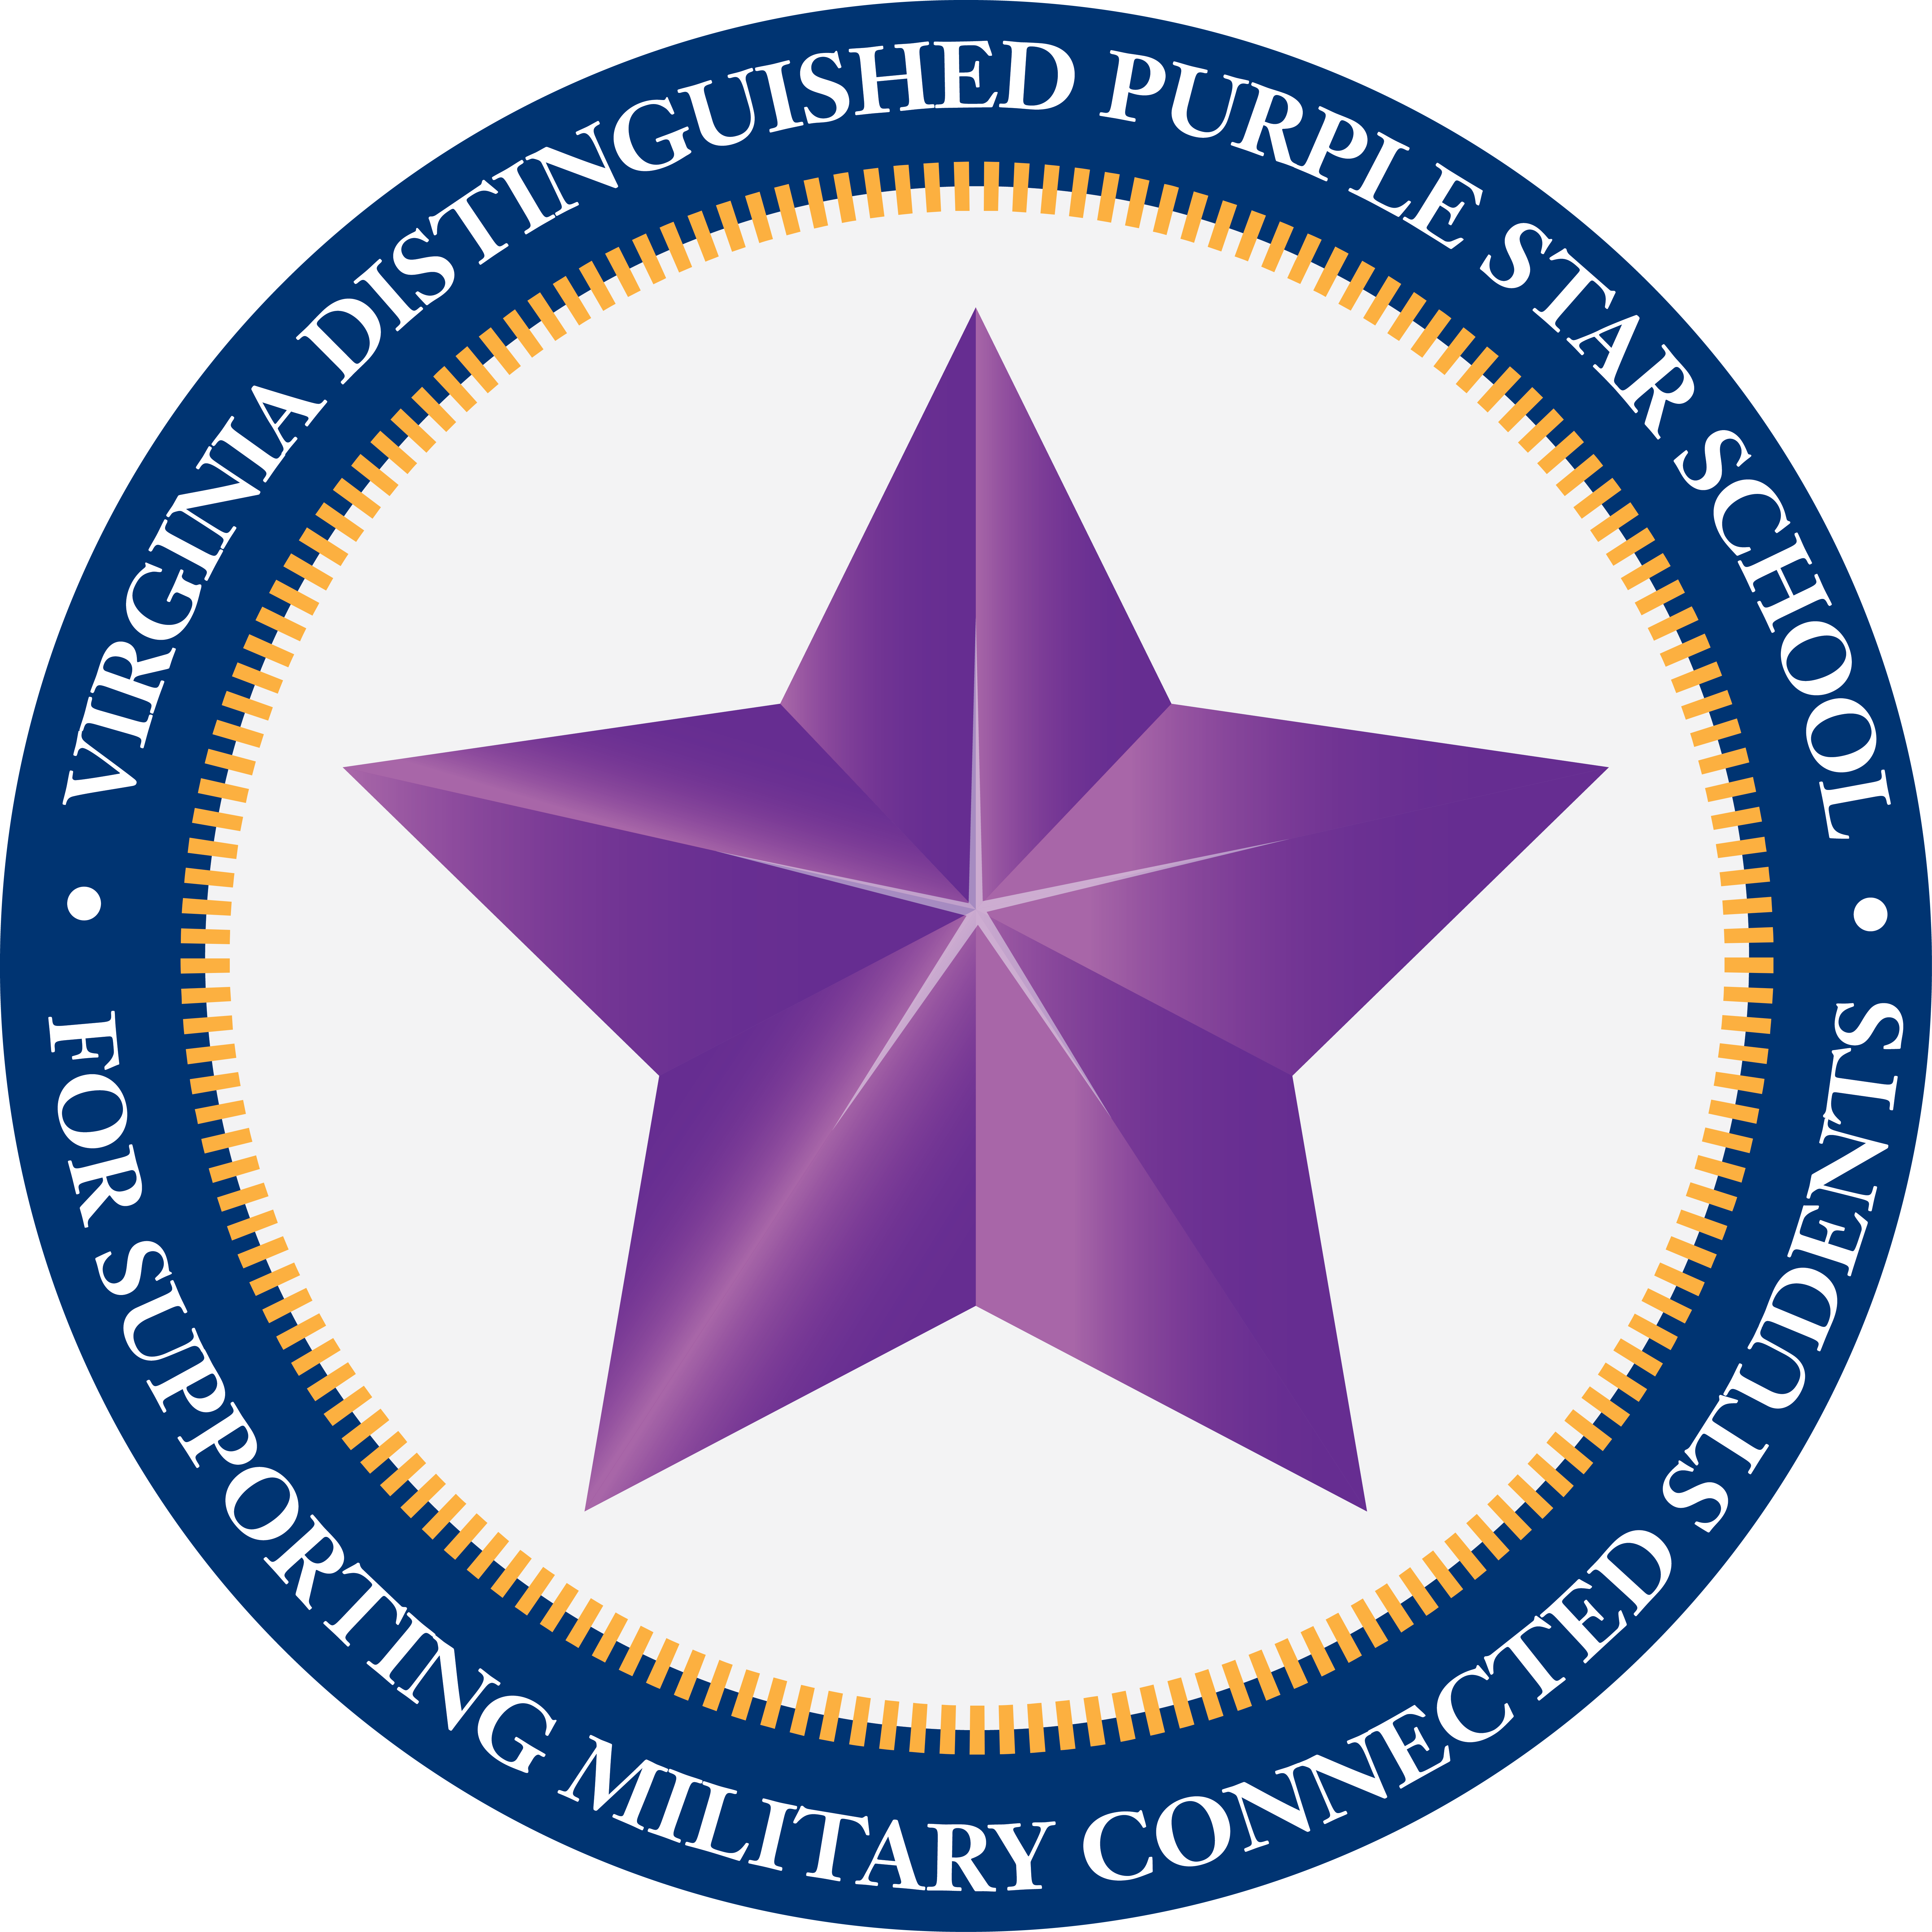 Virginia Ditinguished Purple Star School logo